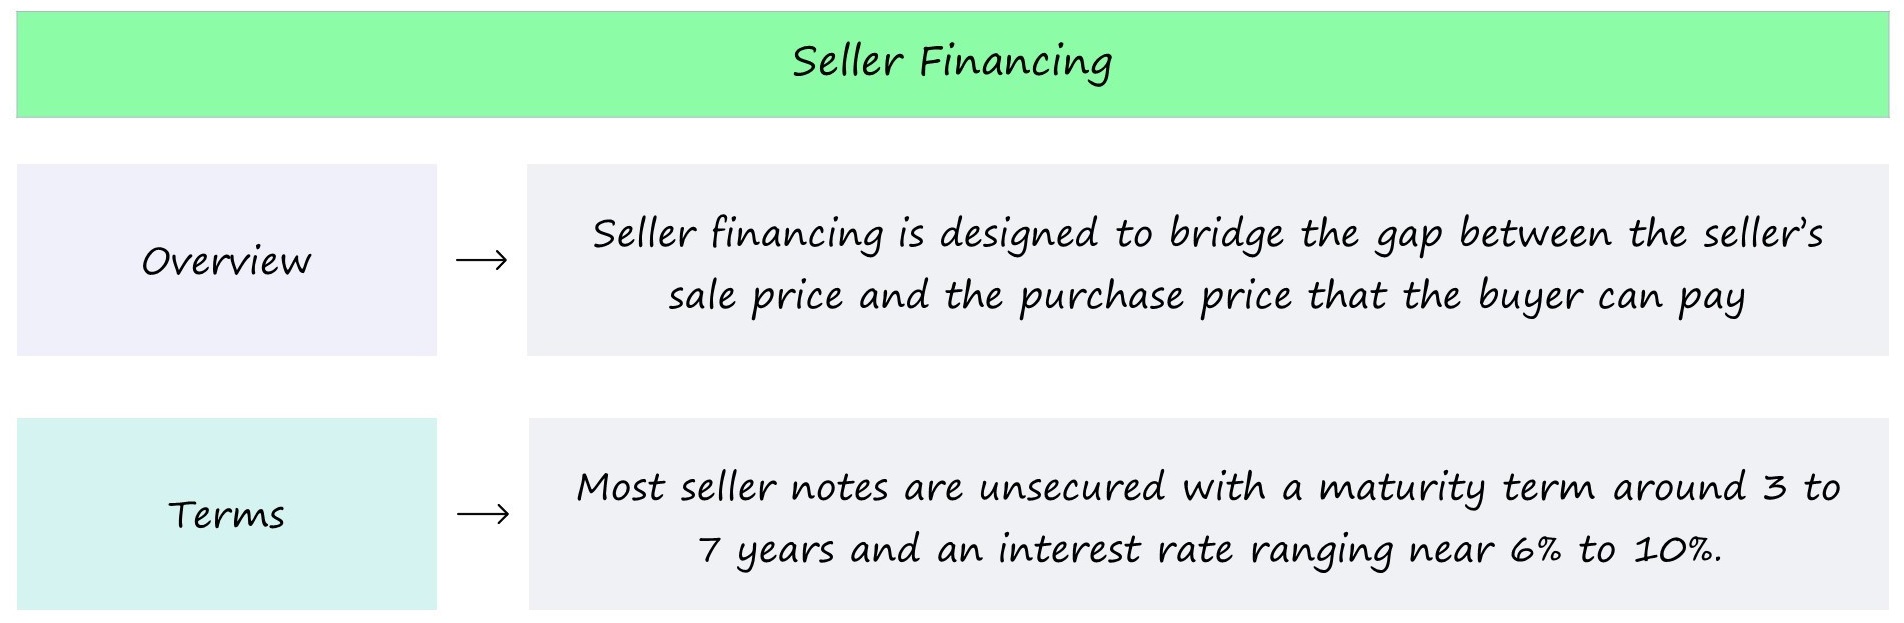 Seller-Financing - 2